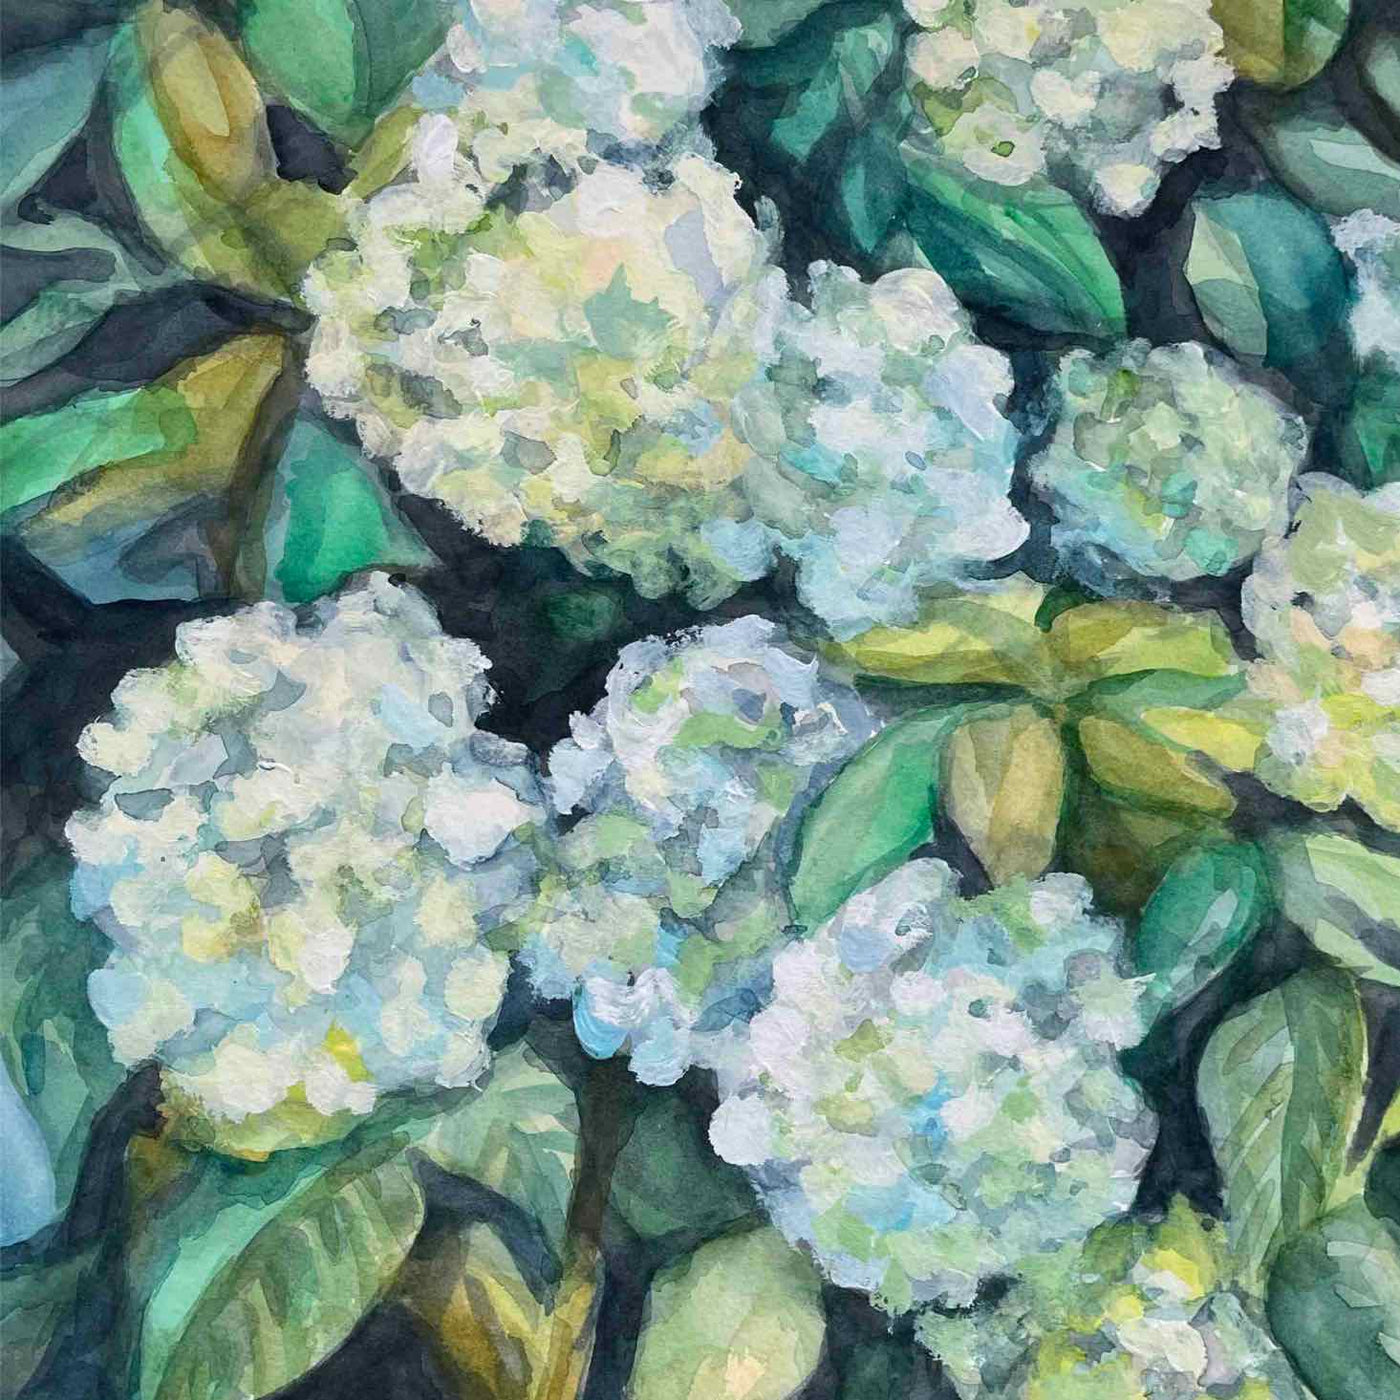 Hydrangeas in white, green & blue